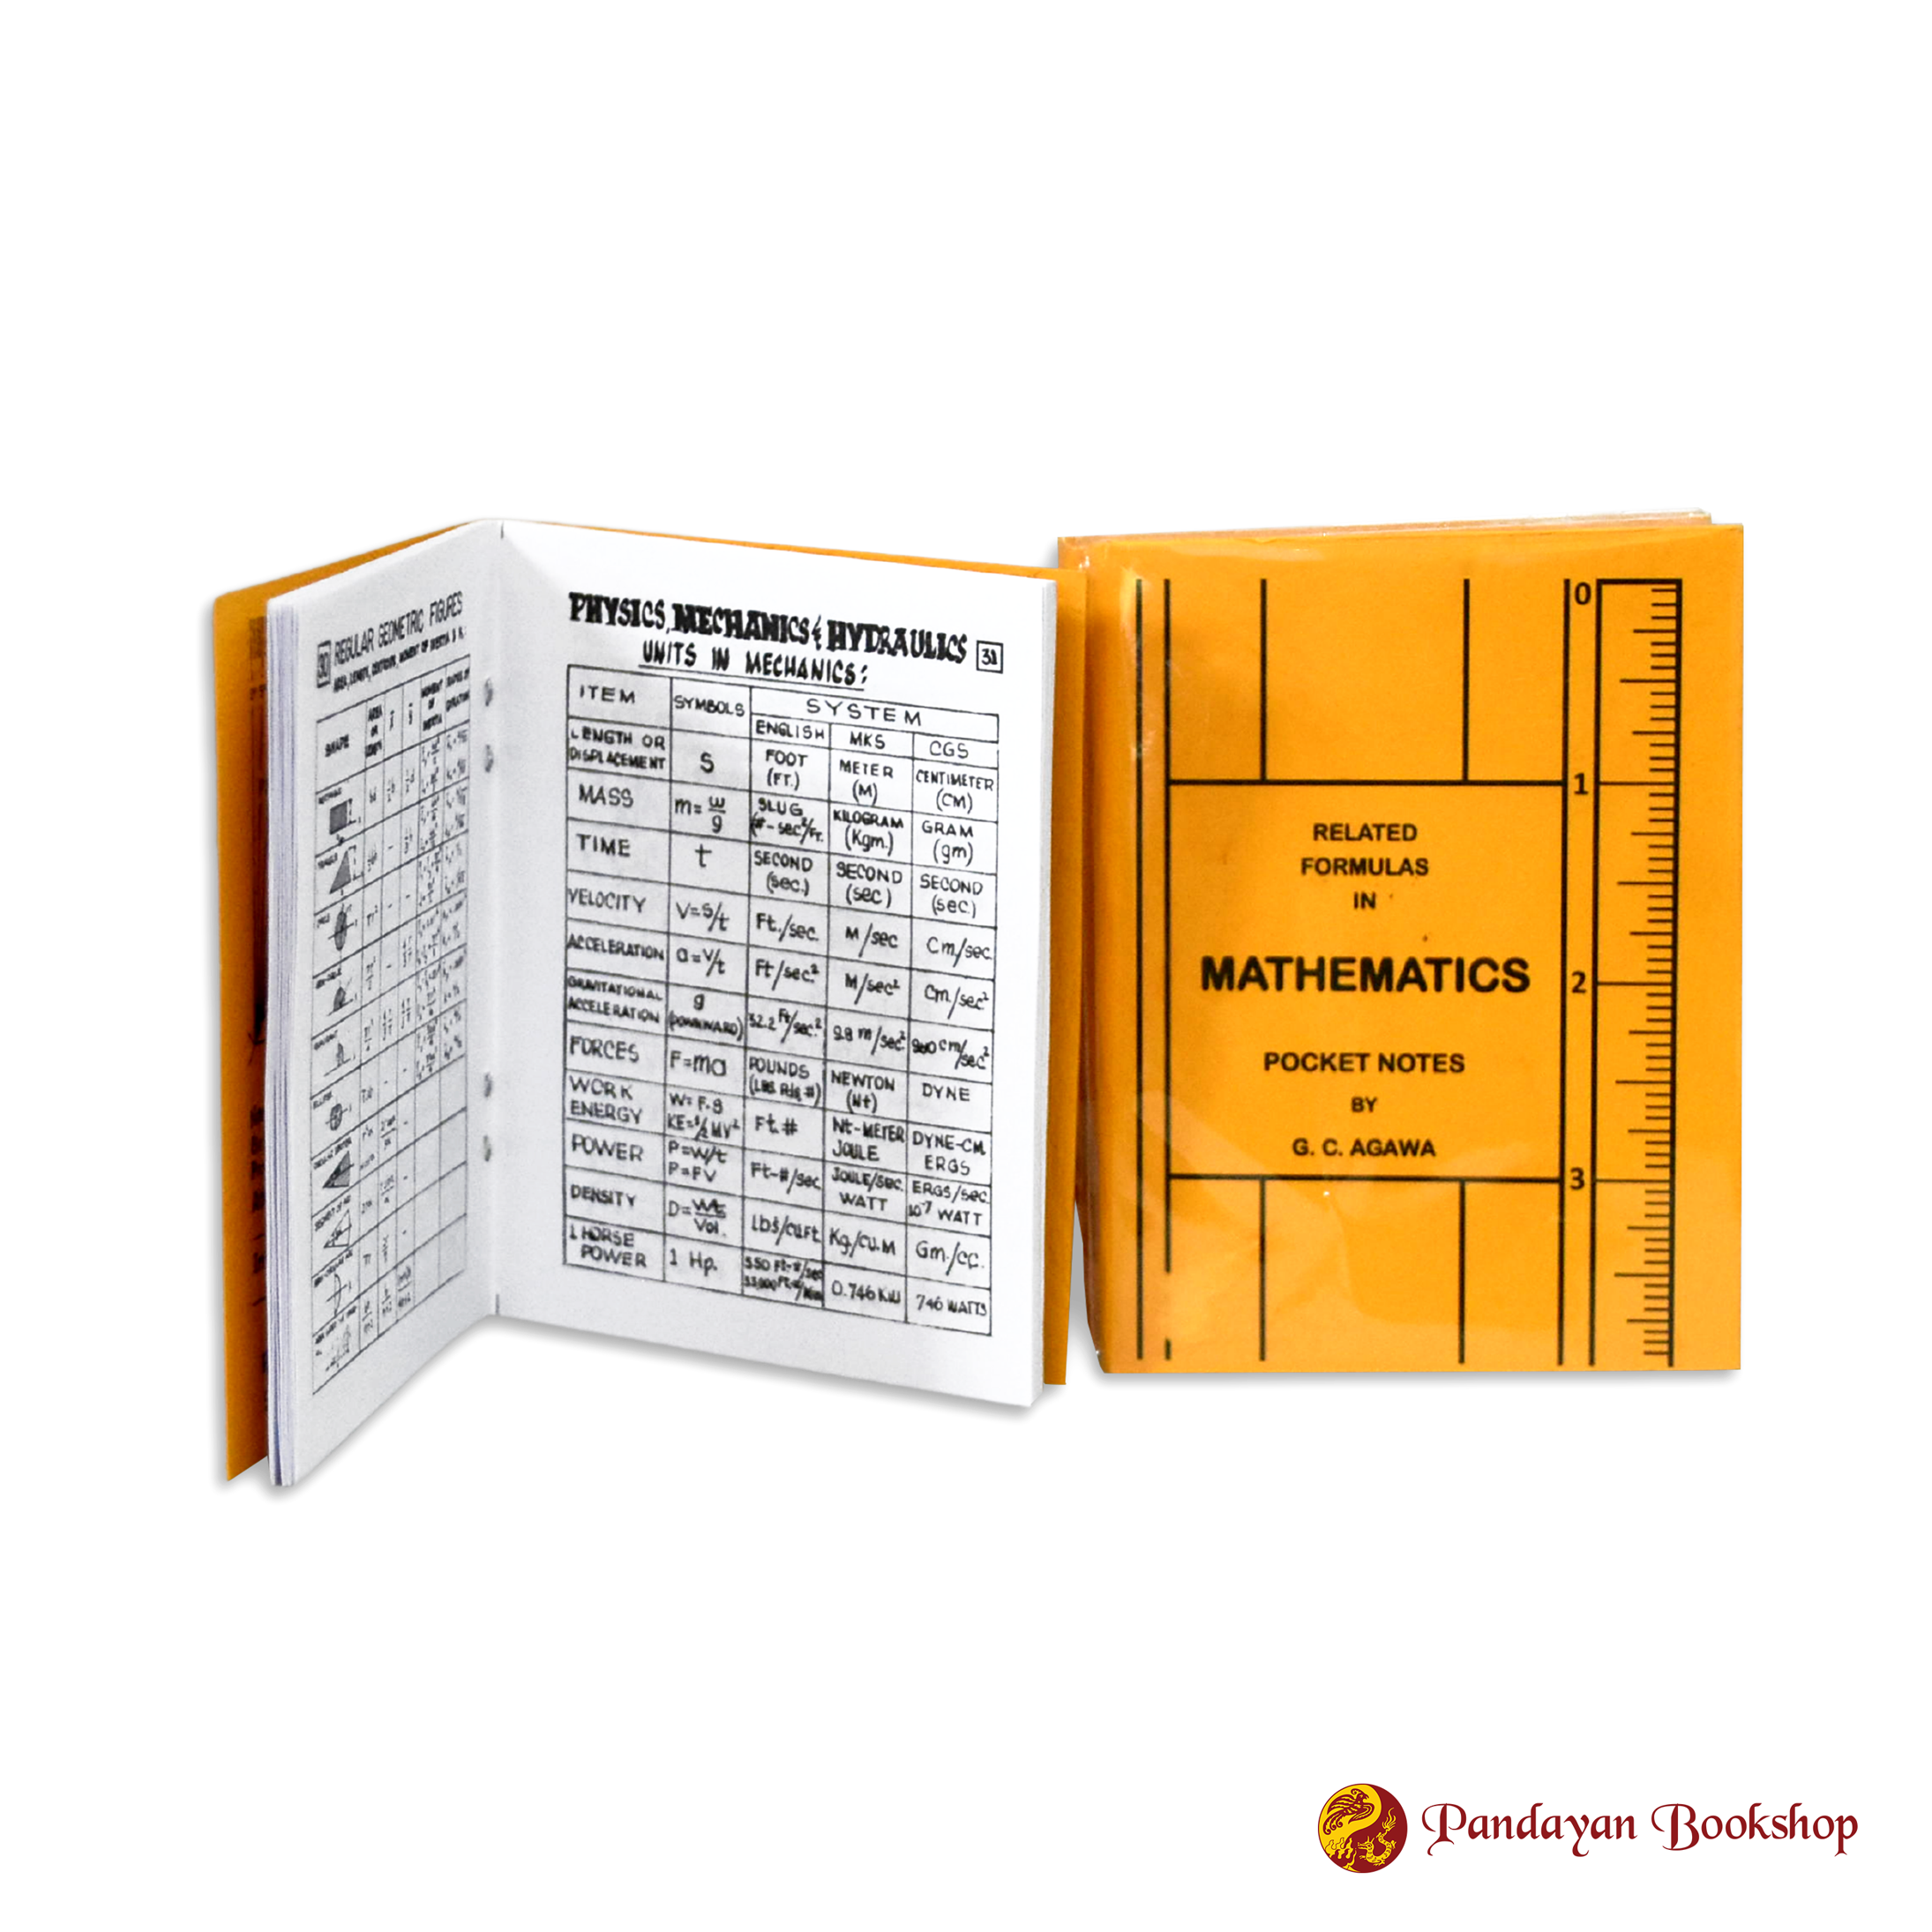 Related Formulas In Mathematics Pocket Notes ni G.